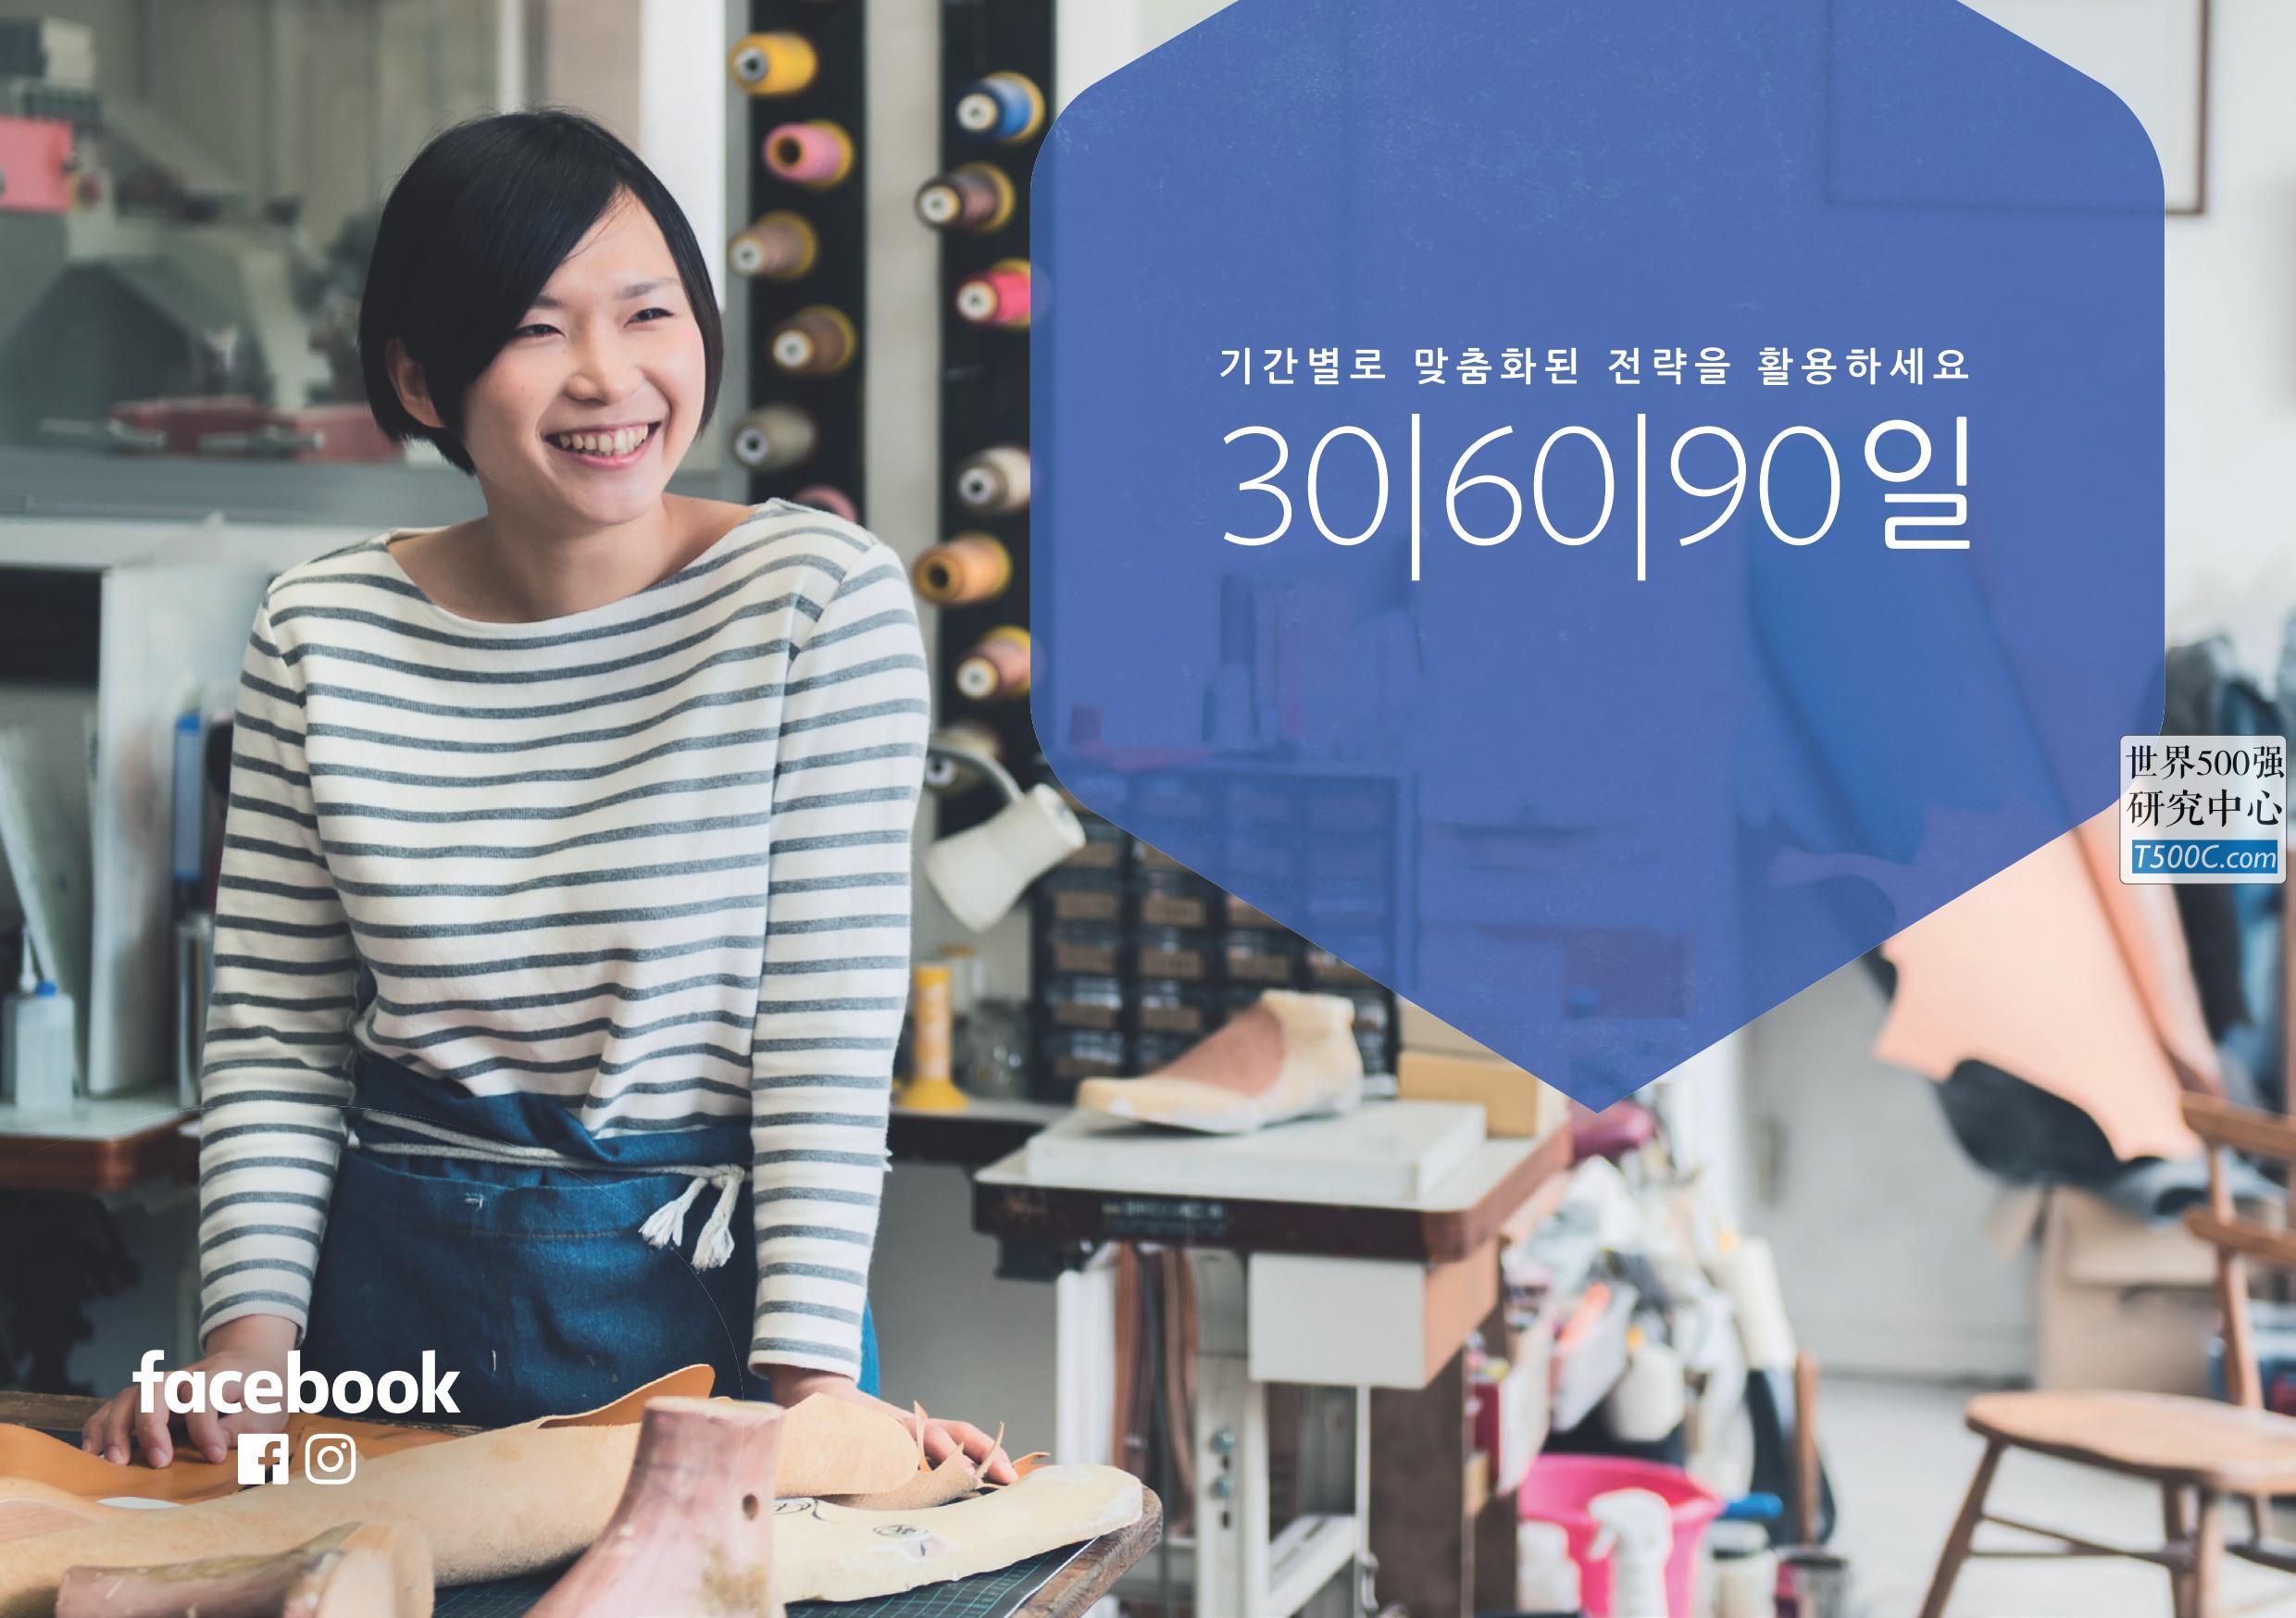 脸书Facebook_公司宣传册Brochure_T500C.com_brochure-korea.pdf